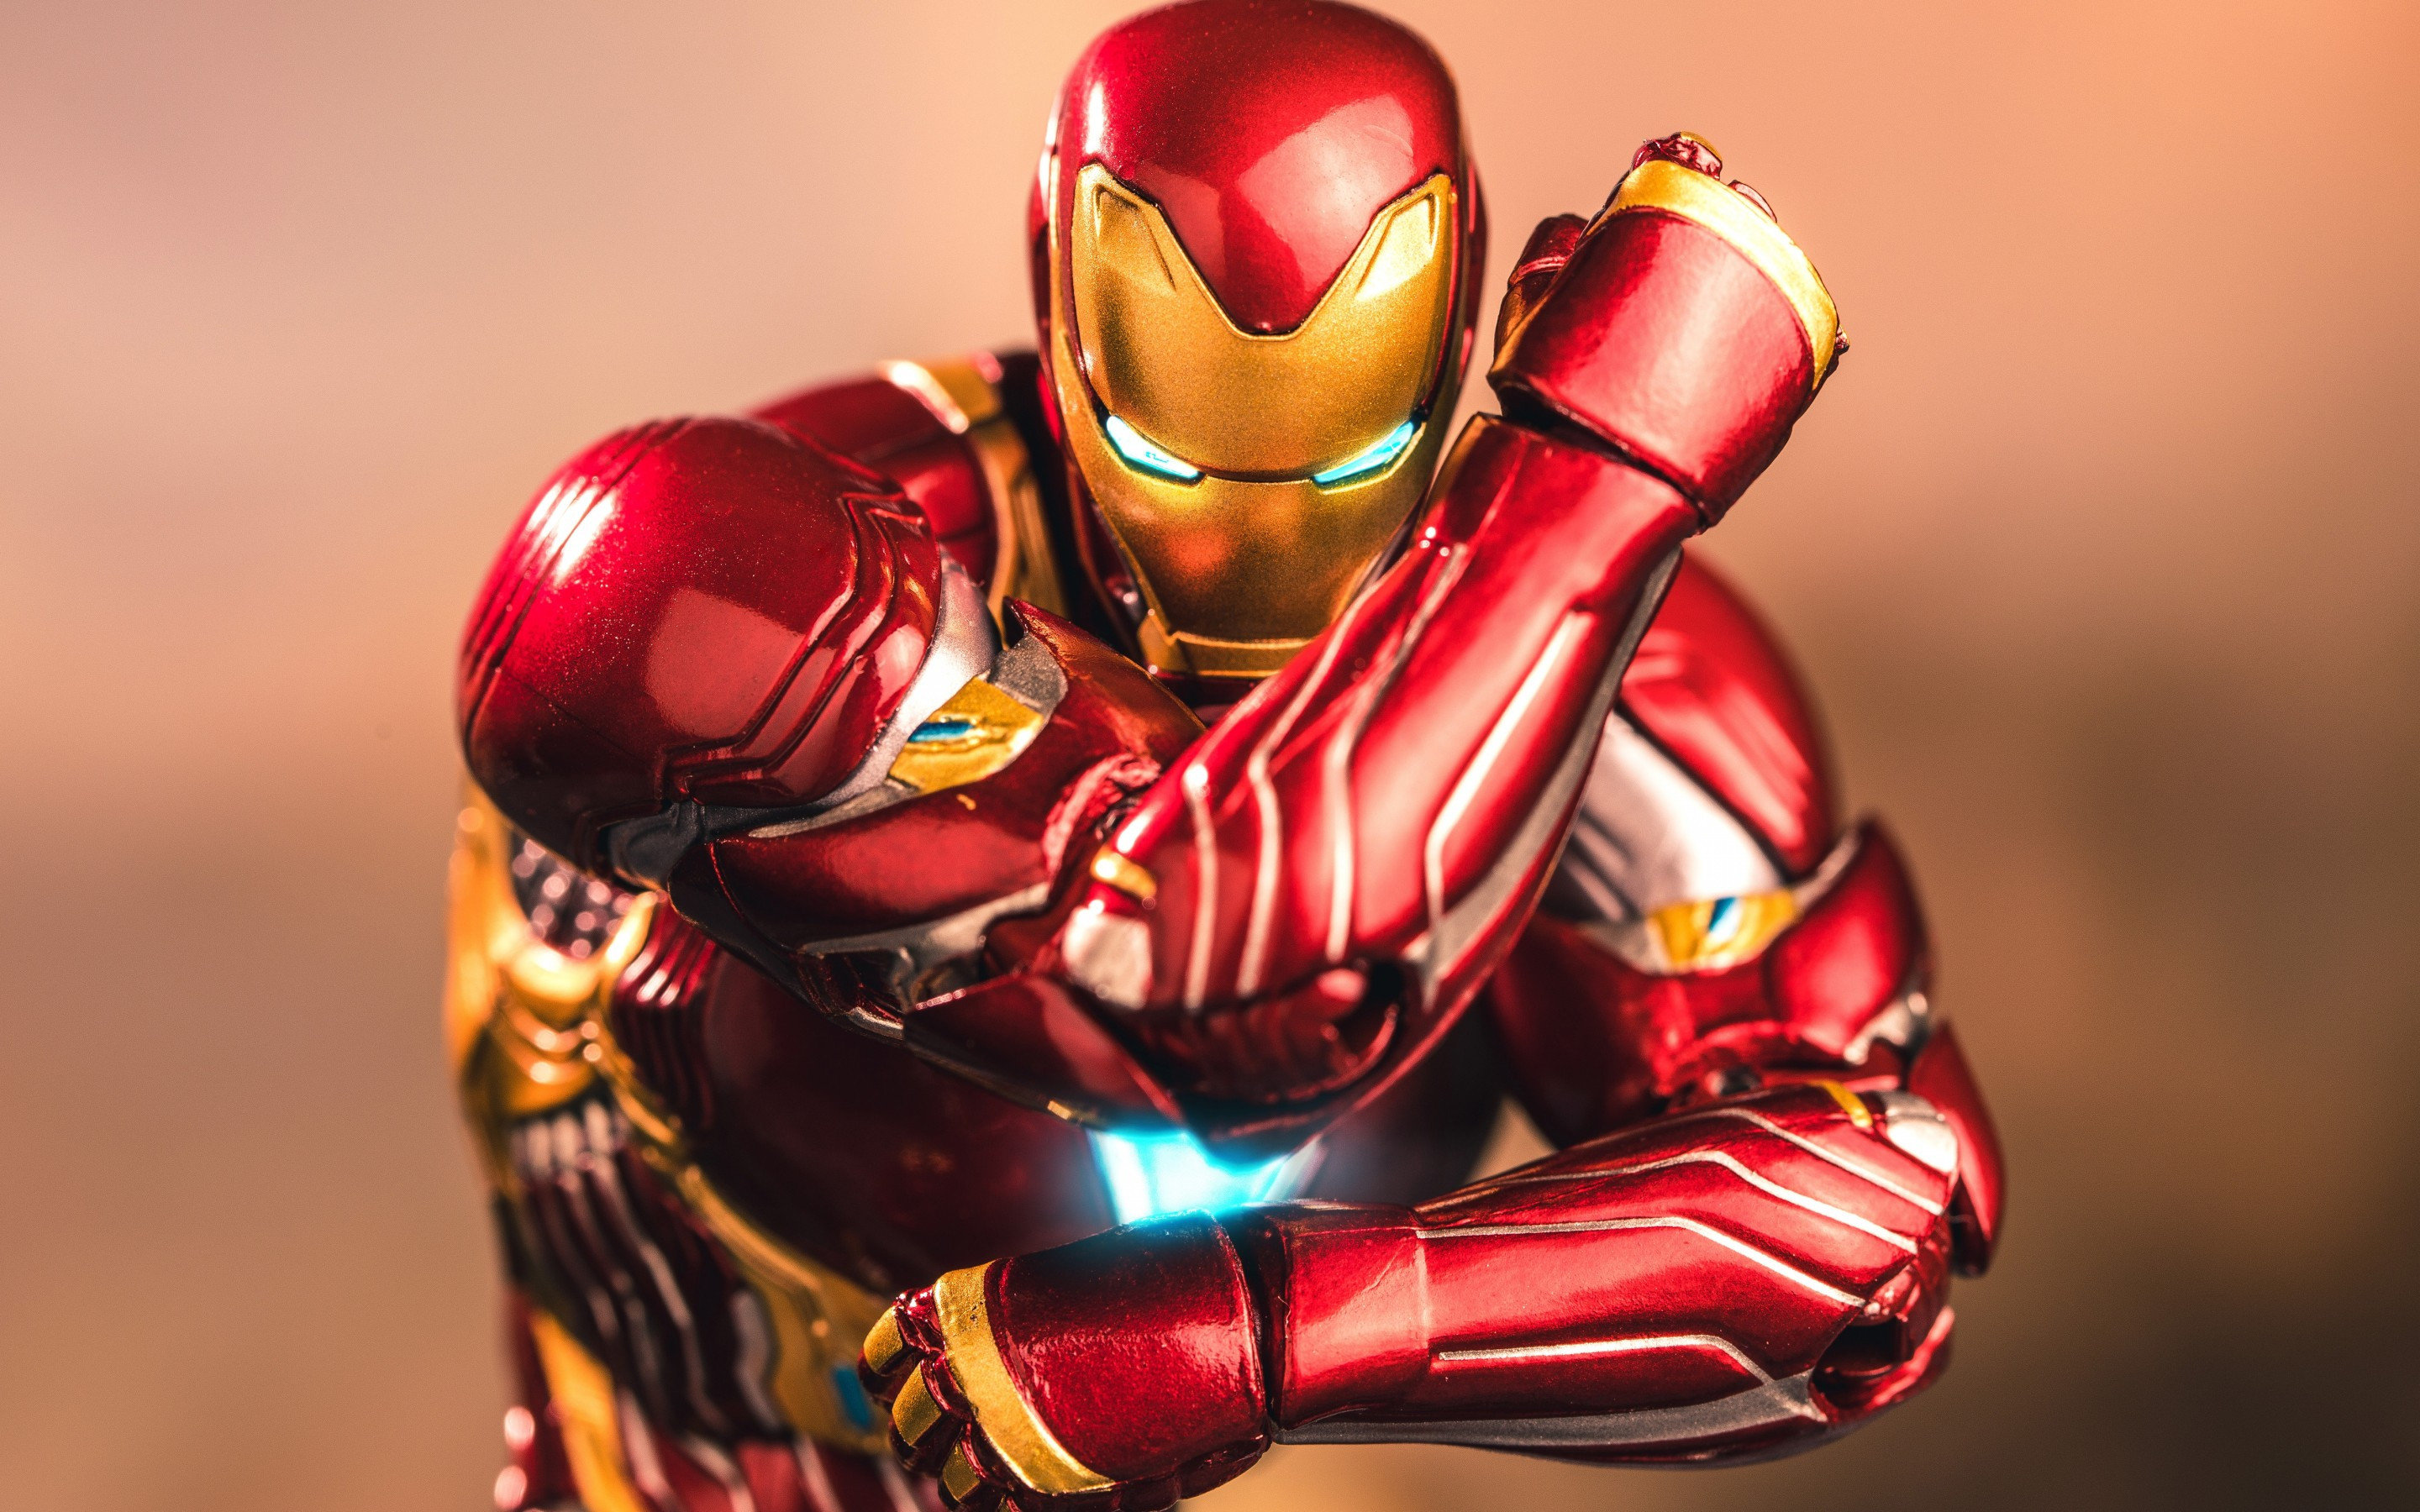 Download 2880x1800 Iron Man, Superhero, Nano Suit Wallpaper for MacBook Pro 15 inch